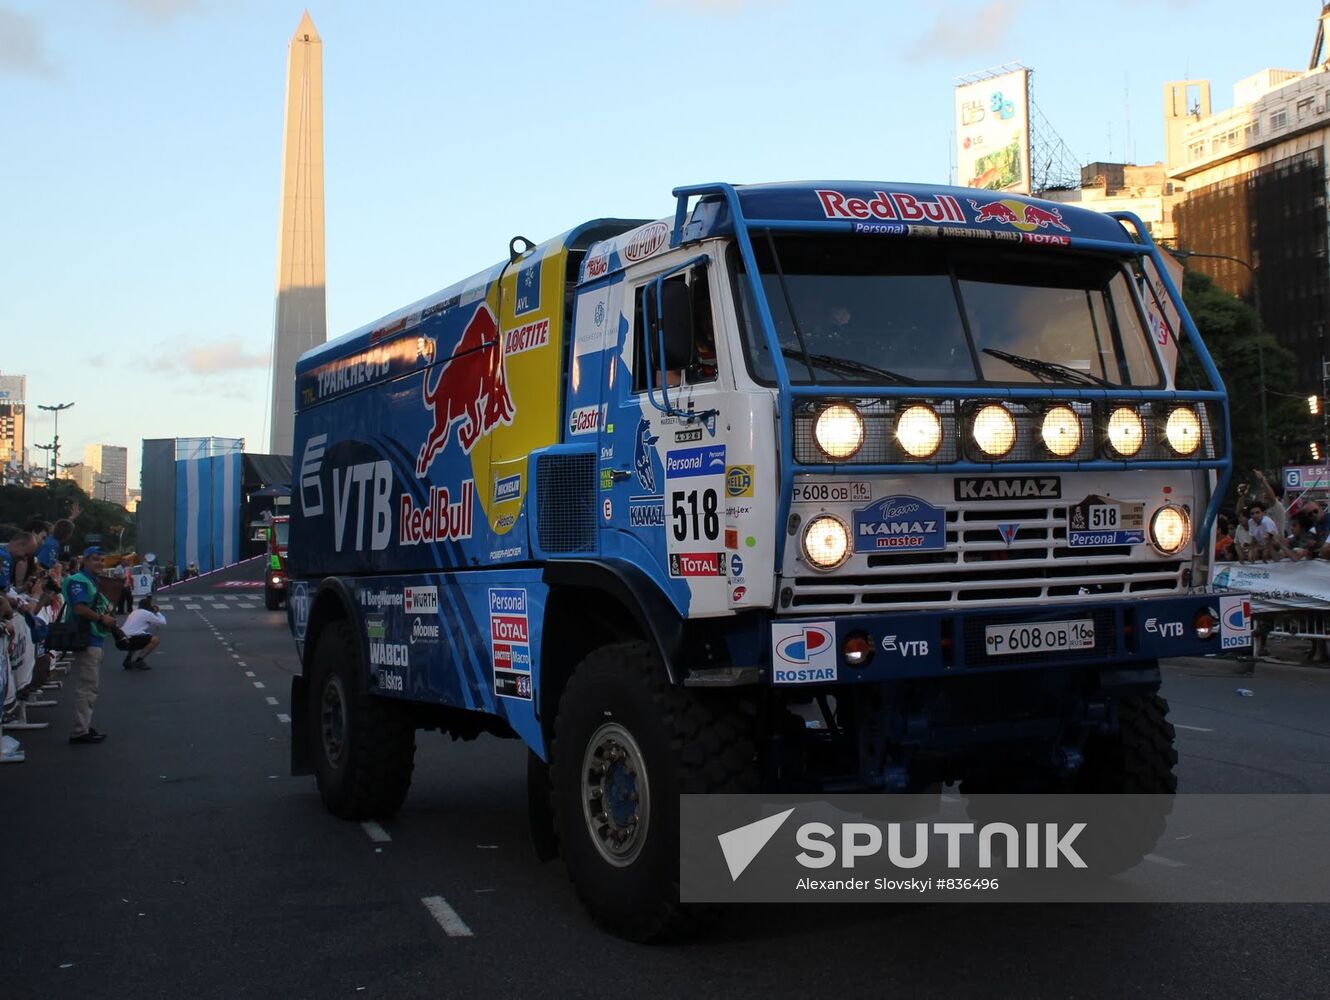 Dakar 2011 rally kicks off in Buenos Aires